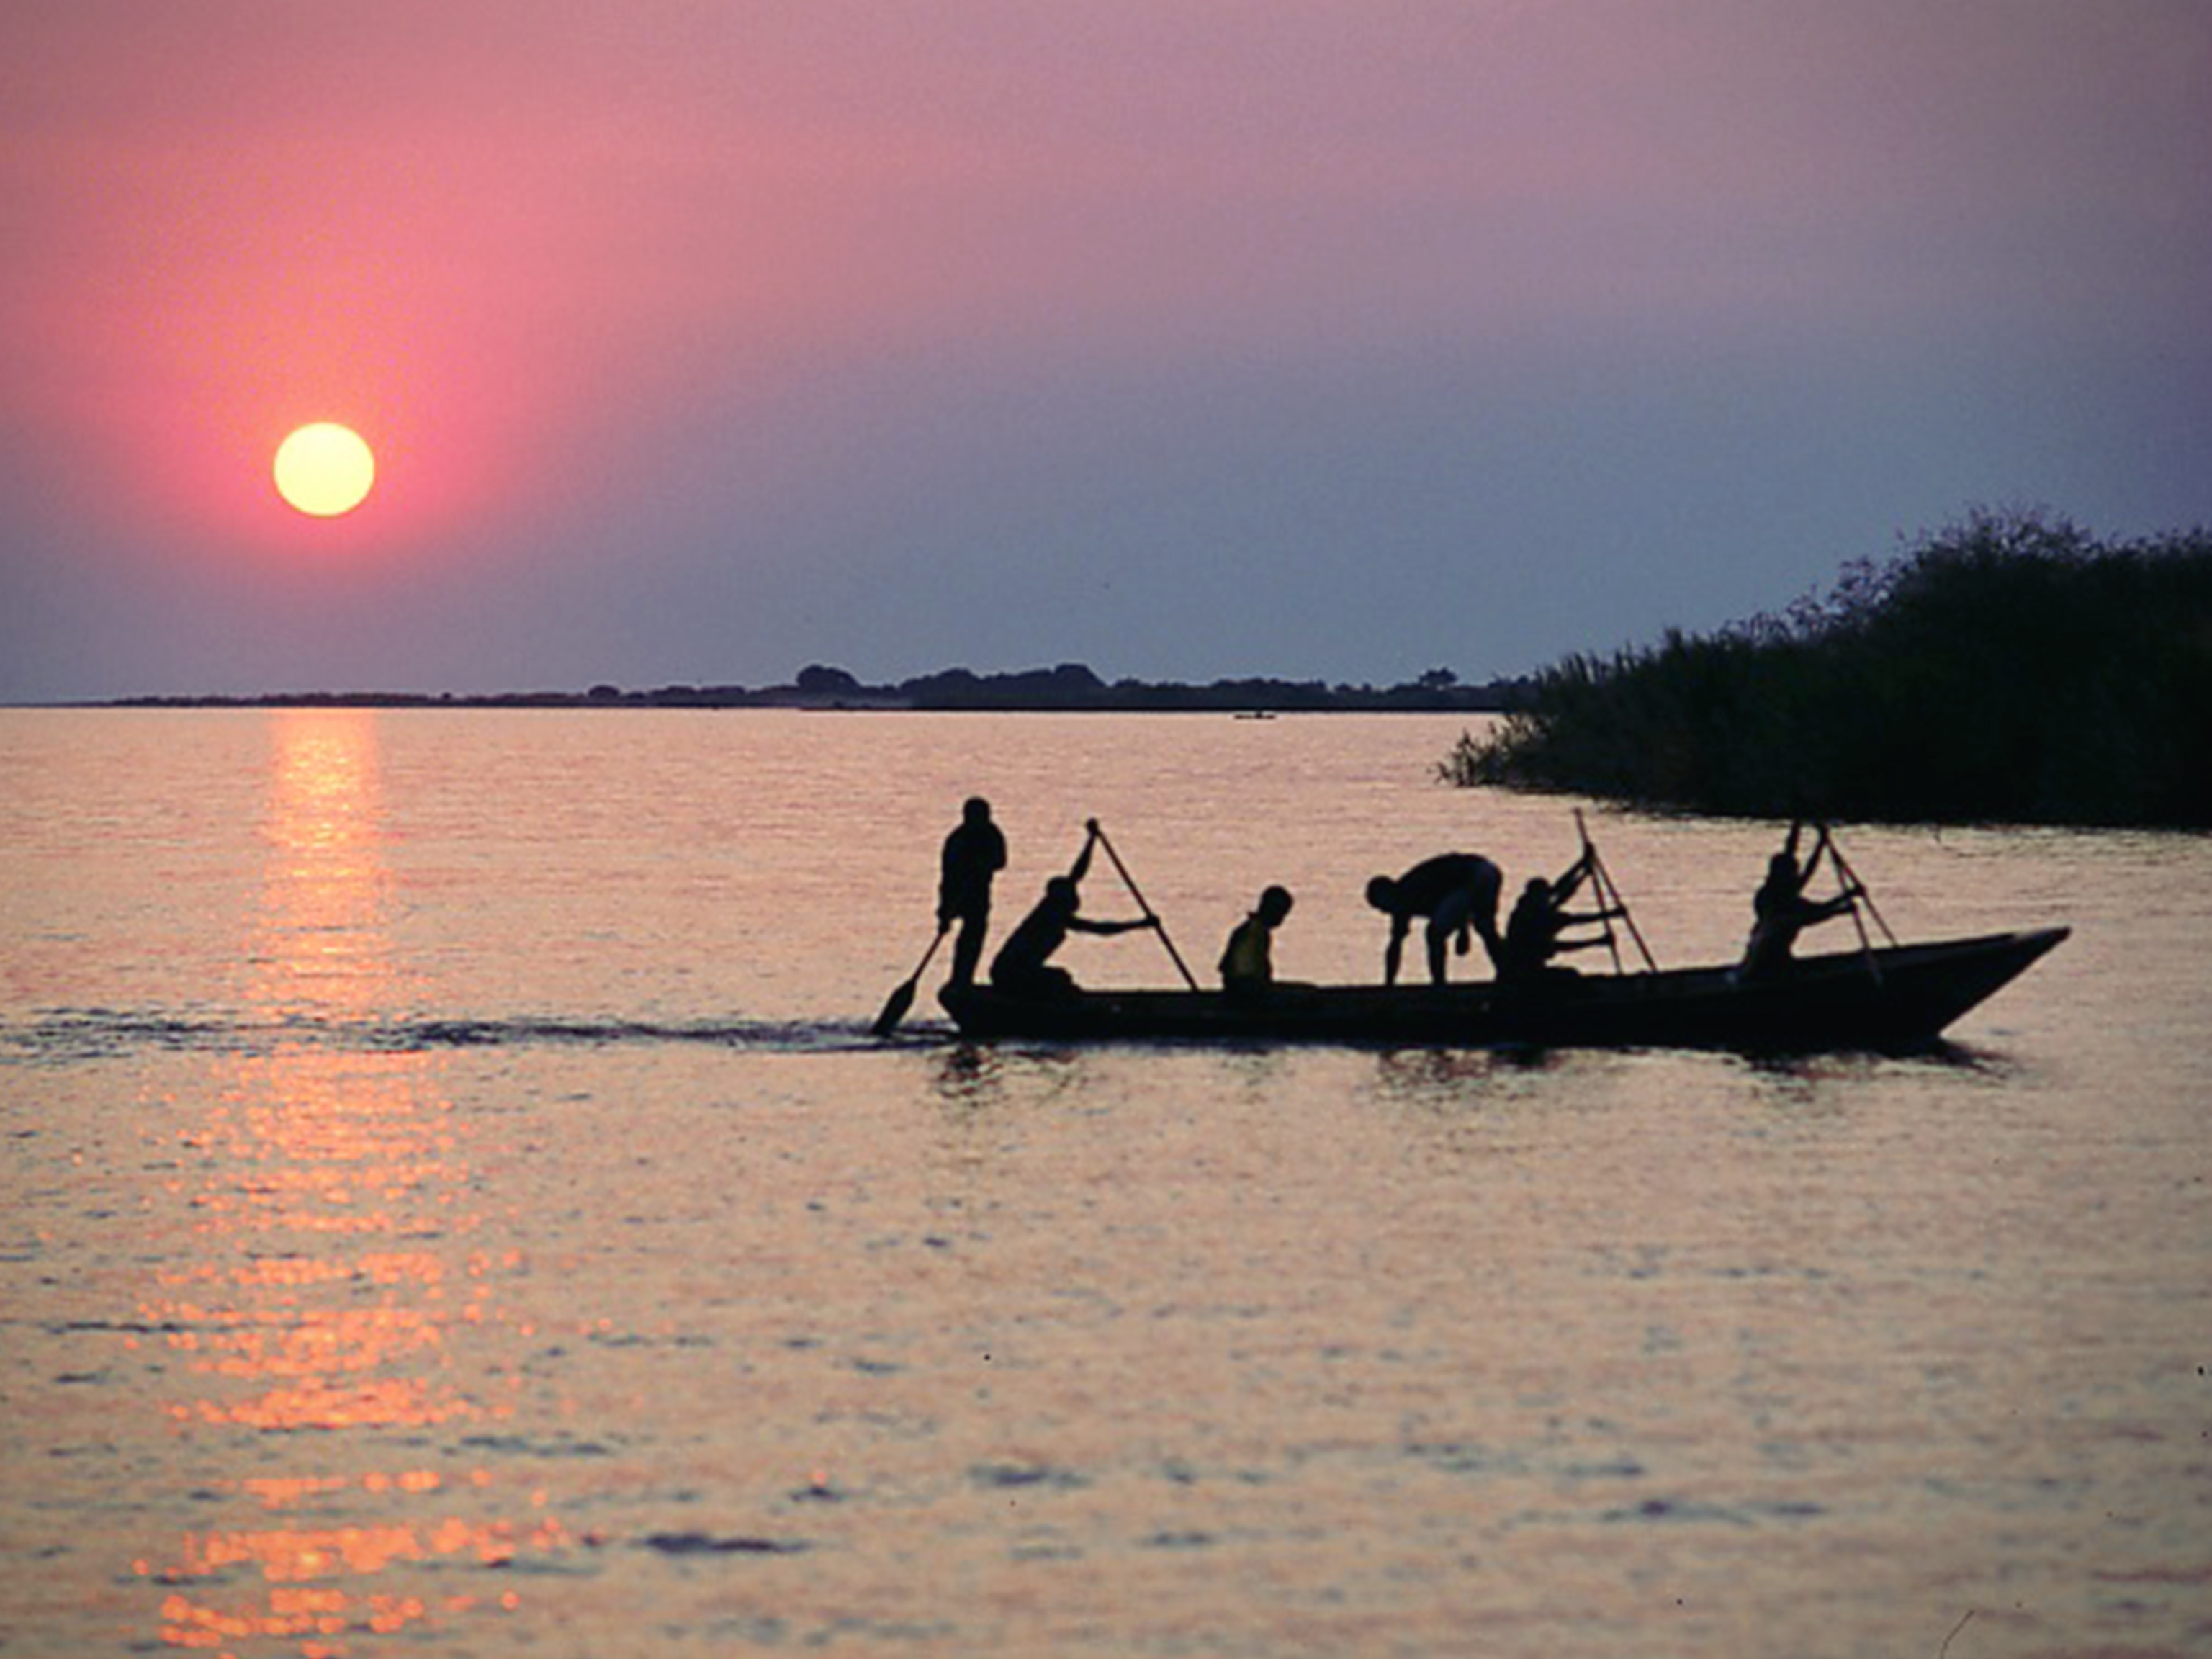 Танзания озеро Танганьика